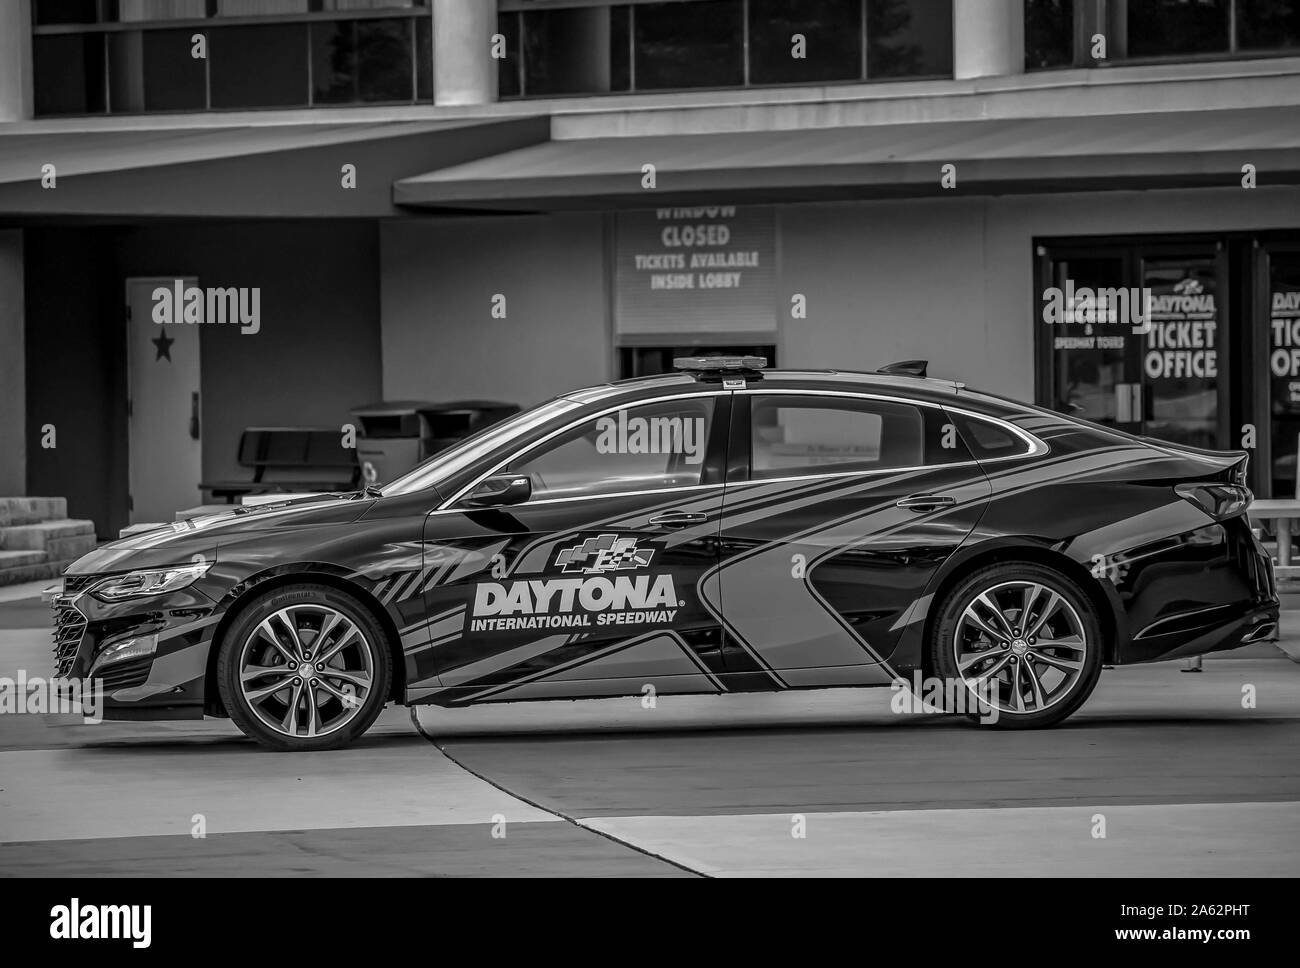 Datytona, Florida. July 18, 2019. Daytona 500 car at Daytona International Speedway Stock Photo